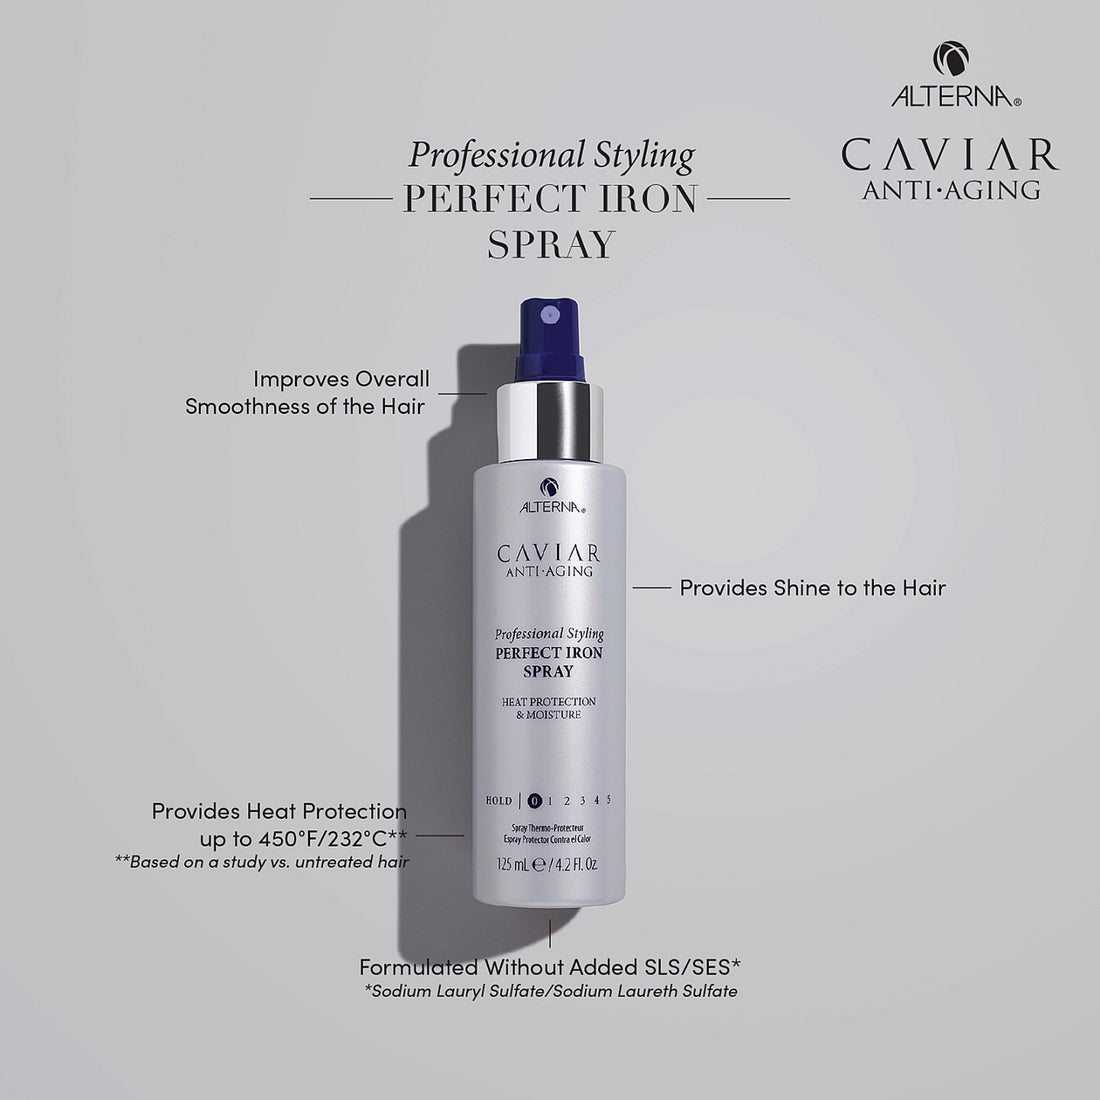 Caviar Anti-Aging Professional Styling Perfect Iron Spray